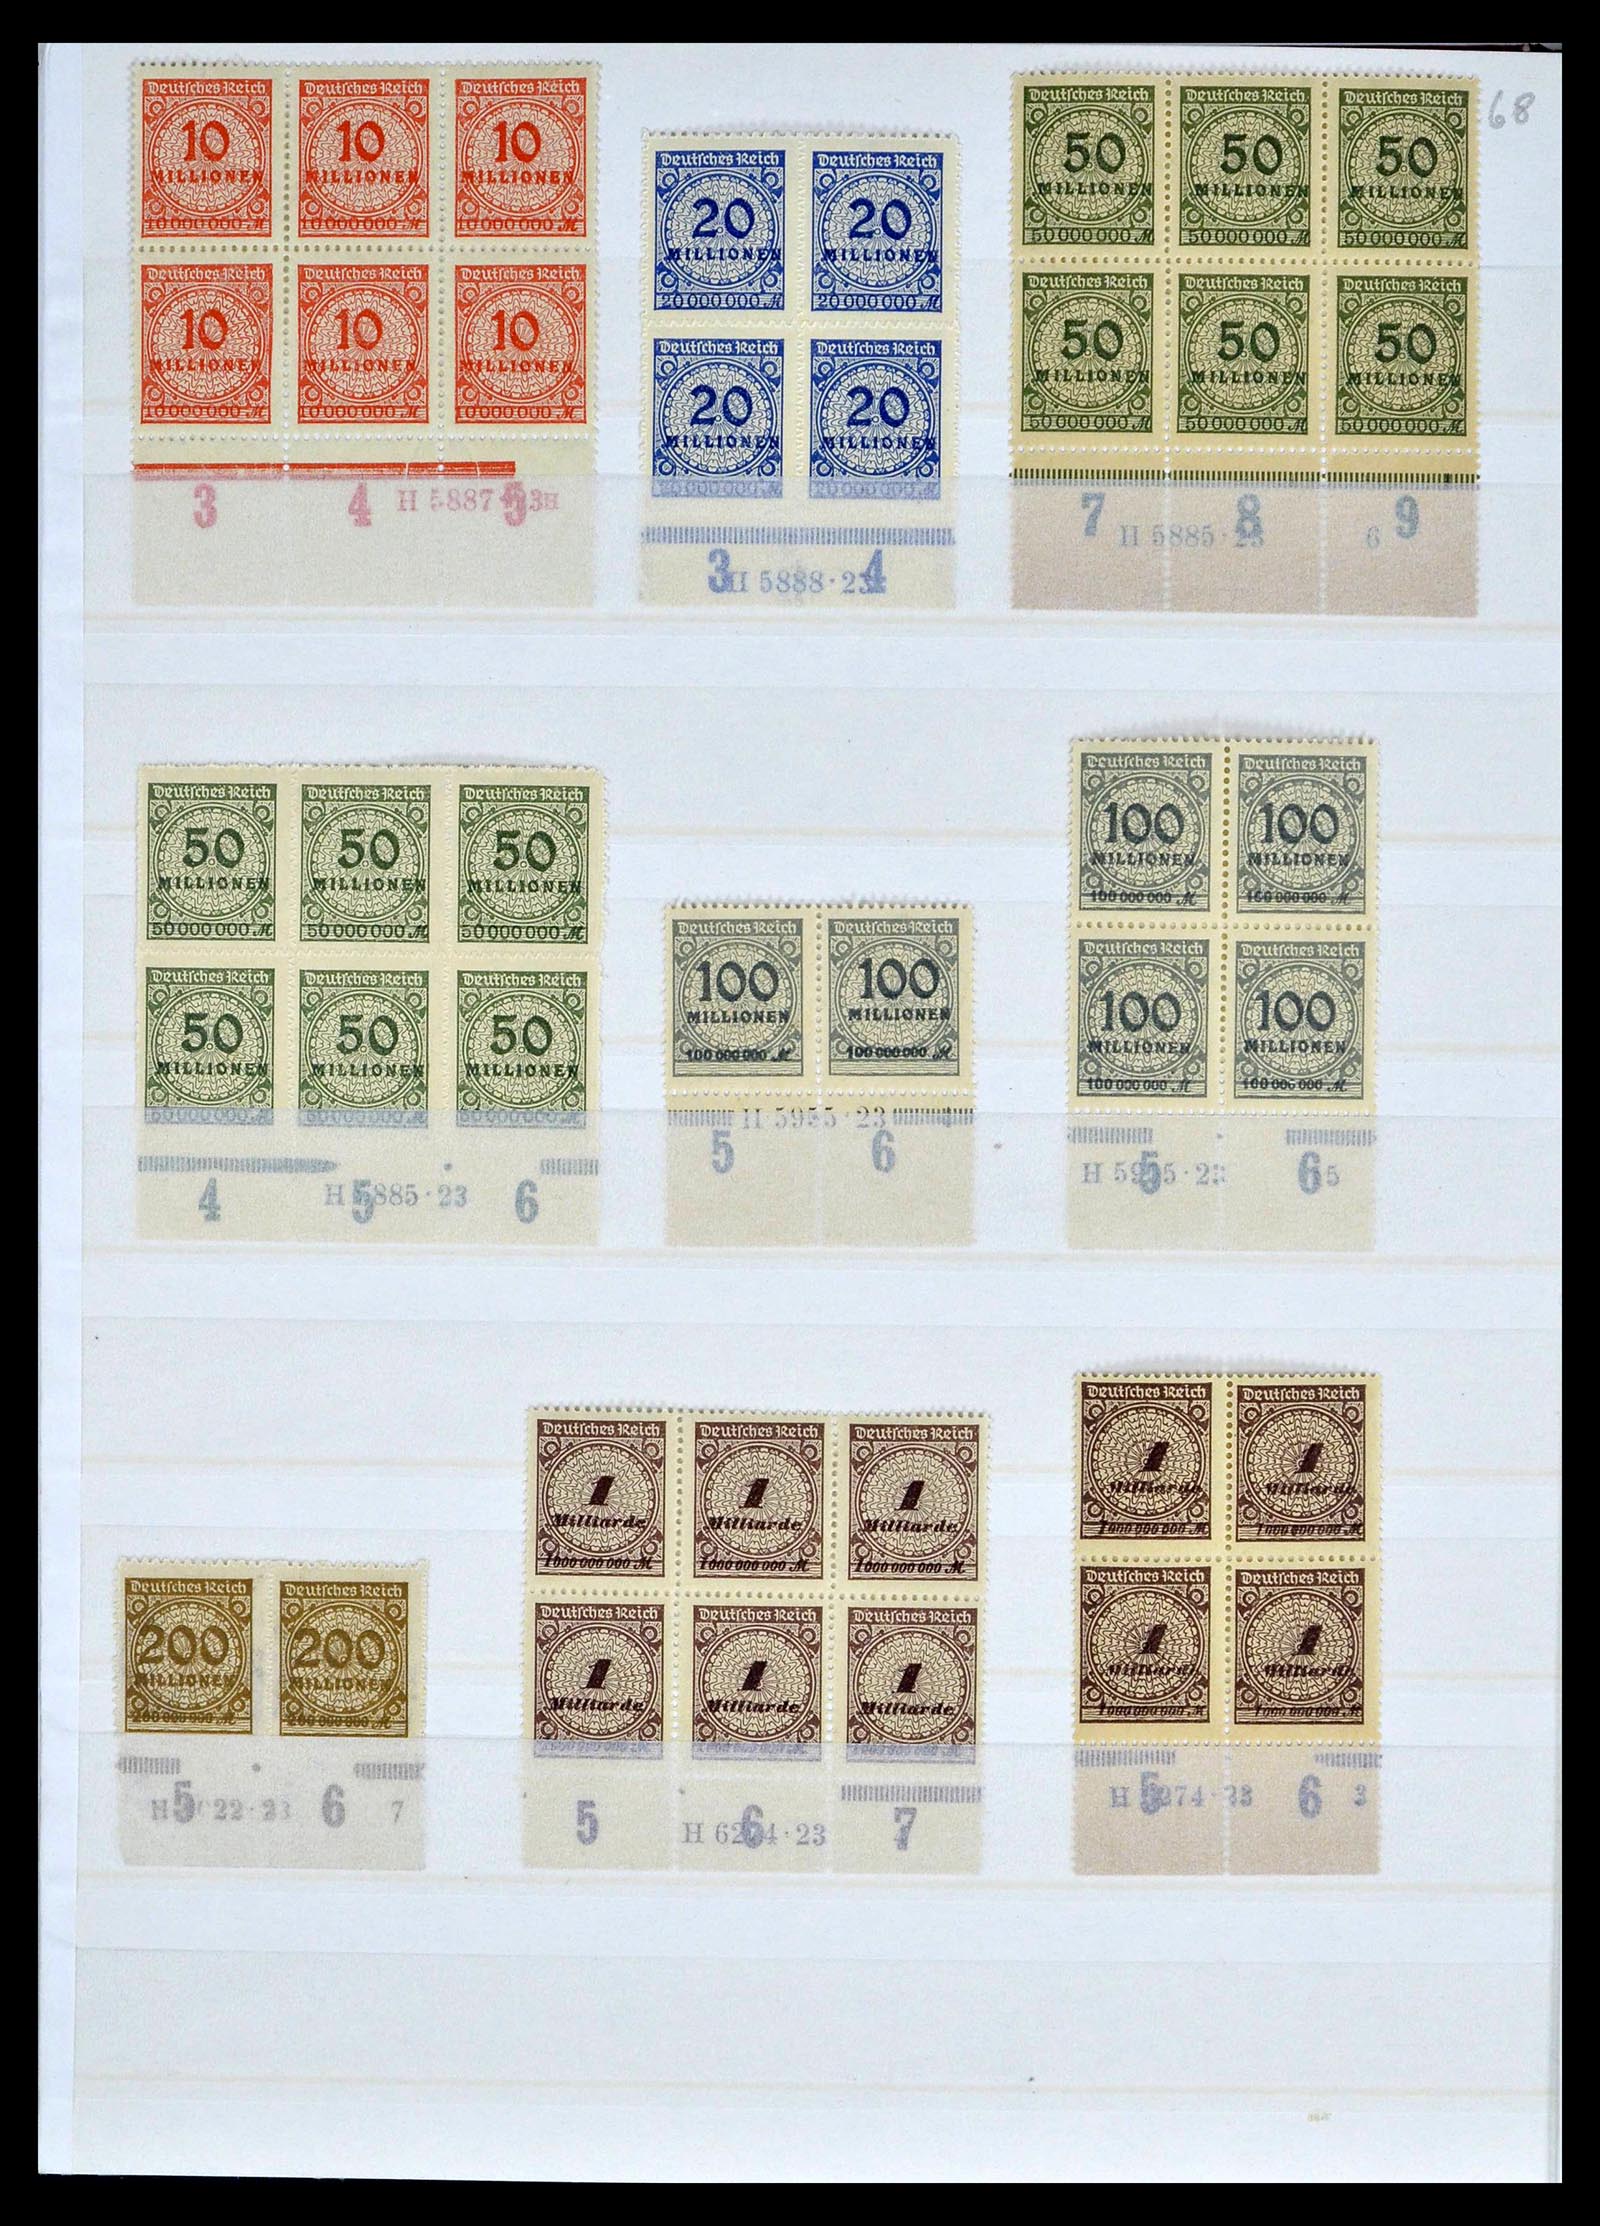 39254 0086 - Stamp collection 39254 German Reich MNH top margins.